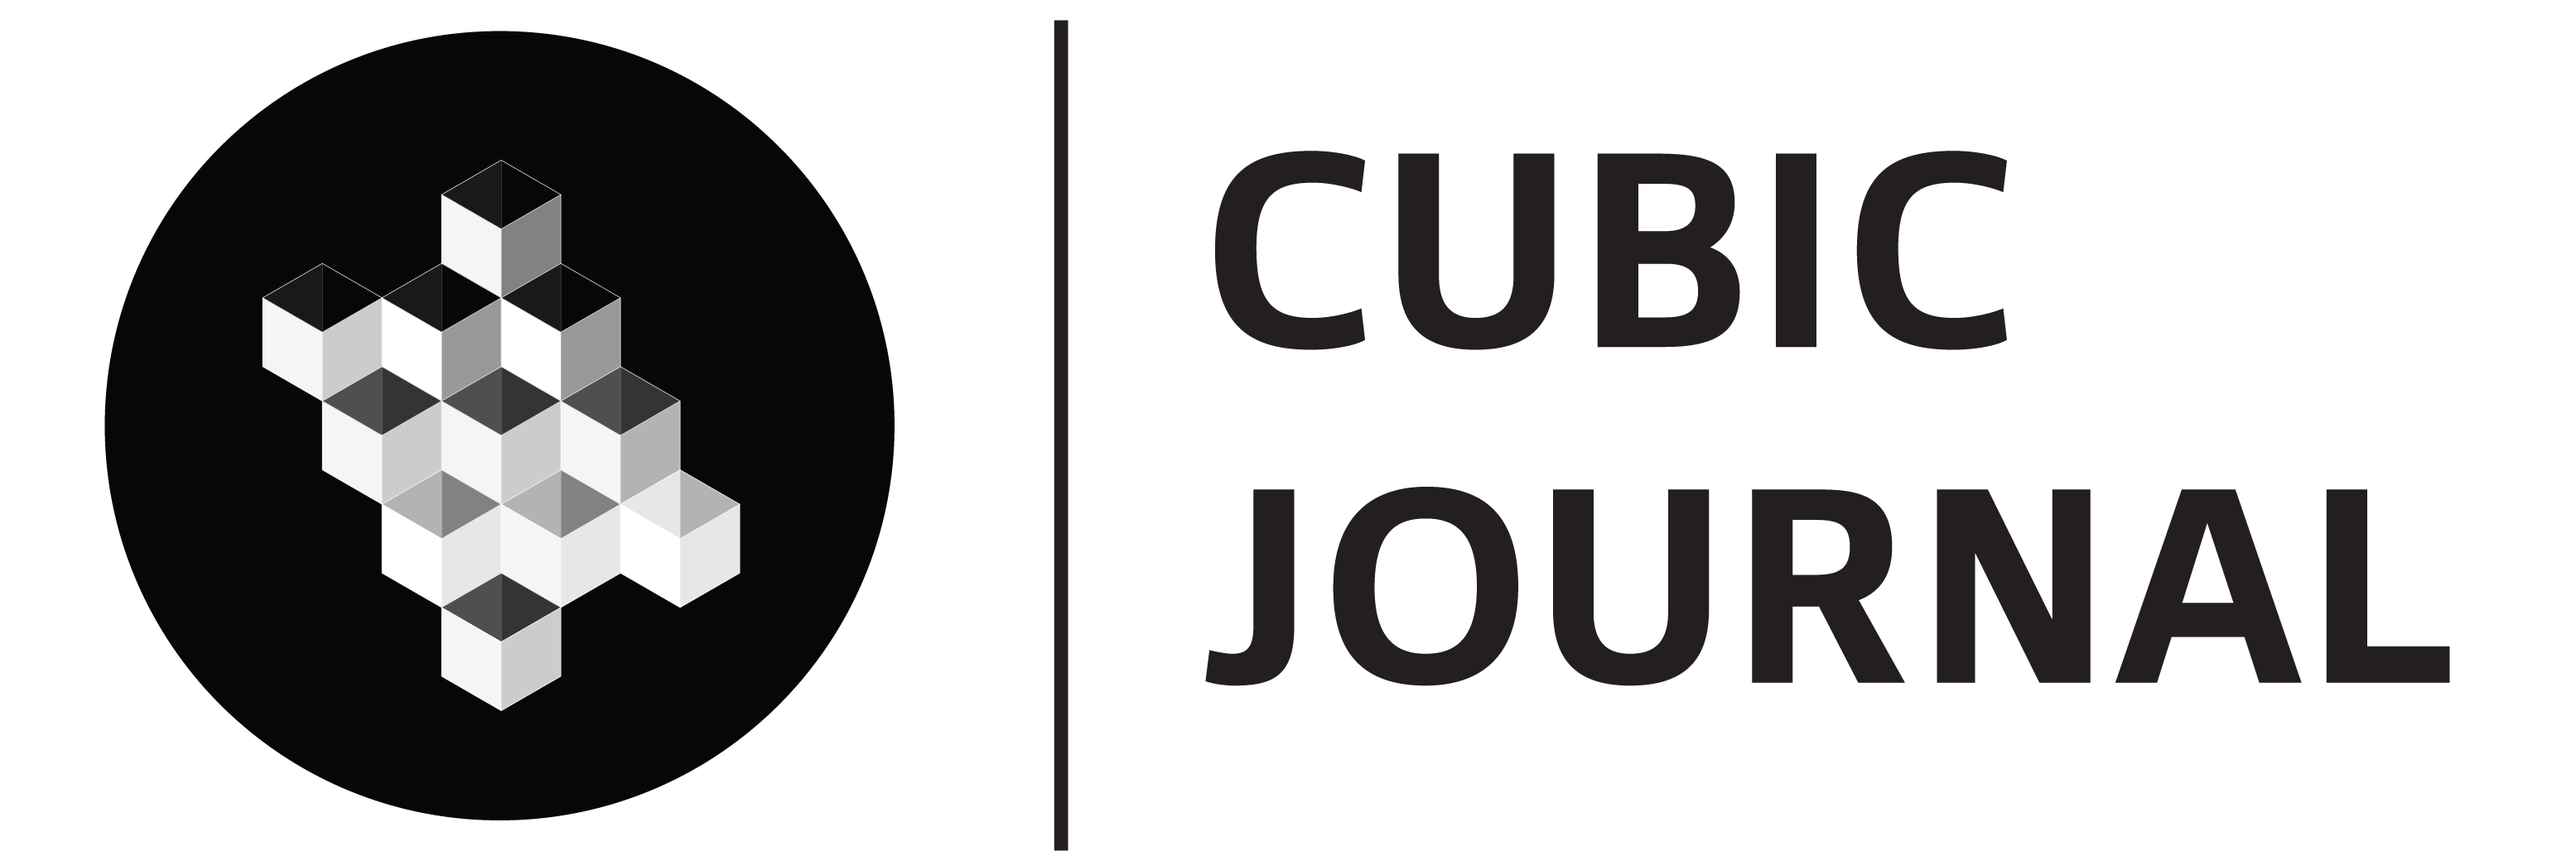 Cubic Journal logo